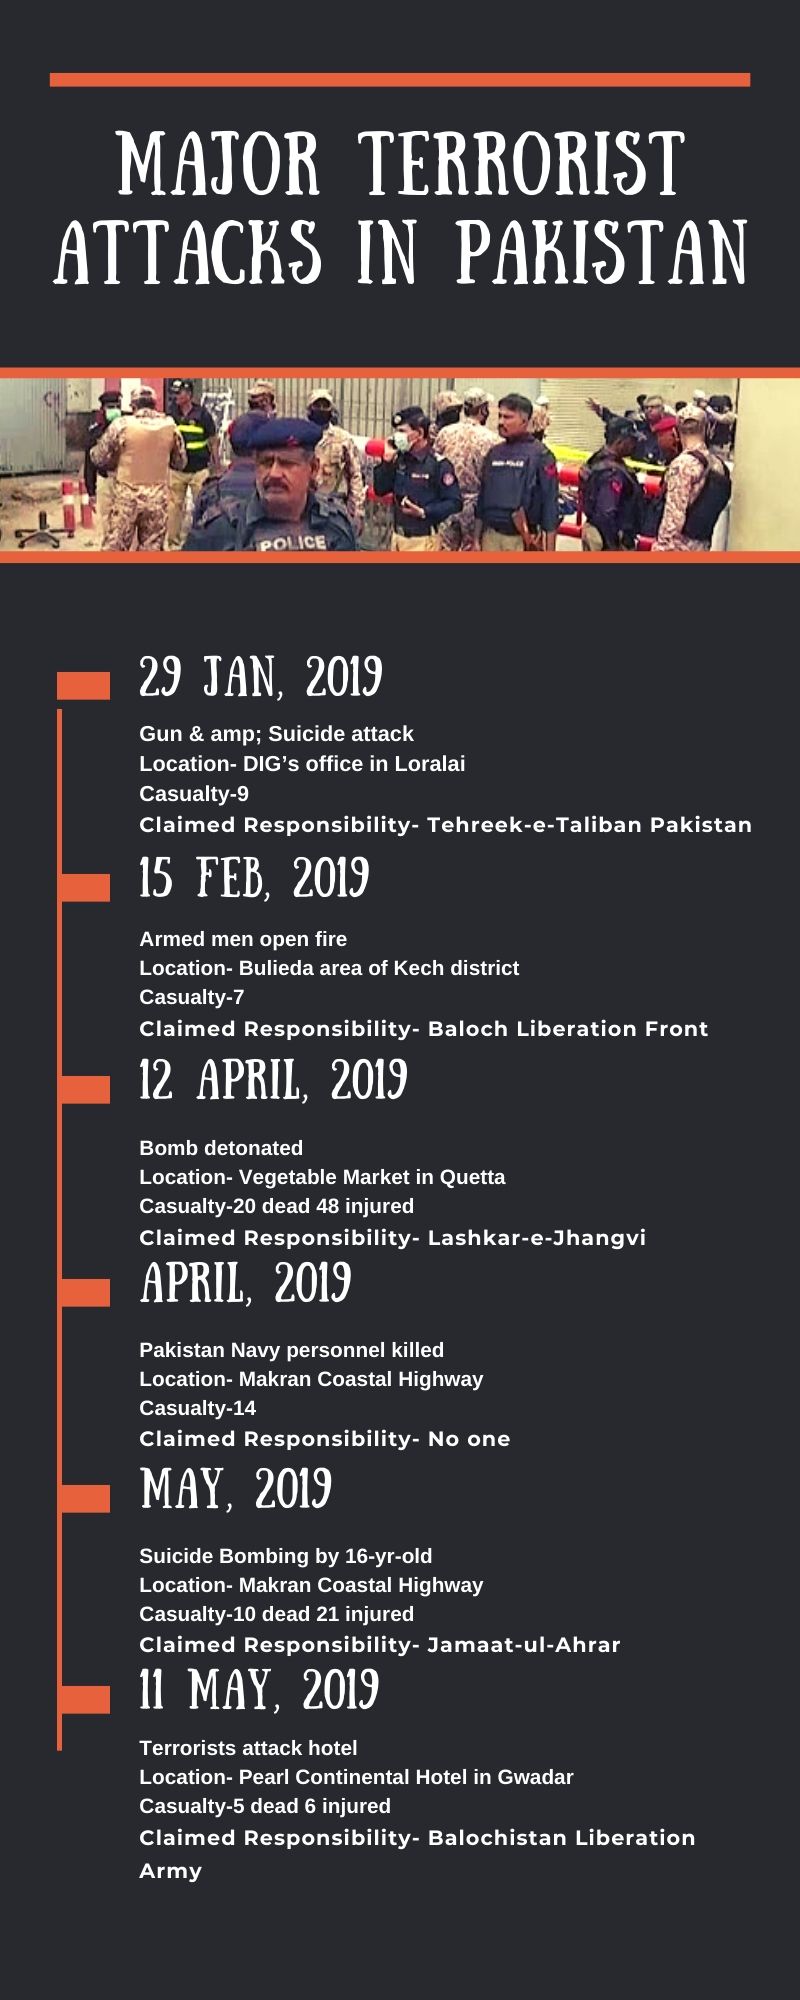 Major terrorist attacks in Pakistan